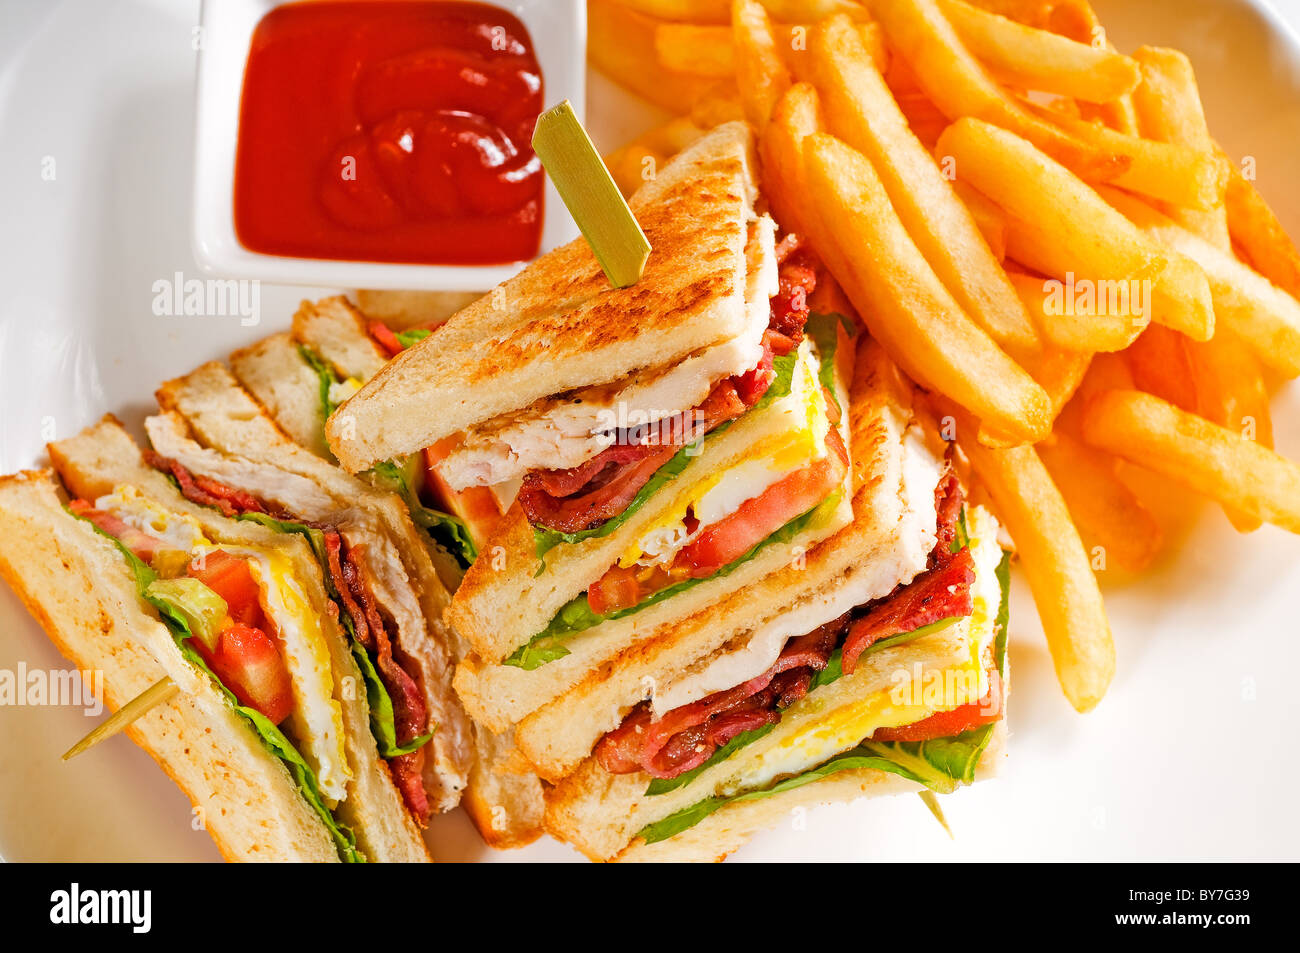 fresh triple decker club sandwich with french fries on side Stock Photo